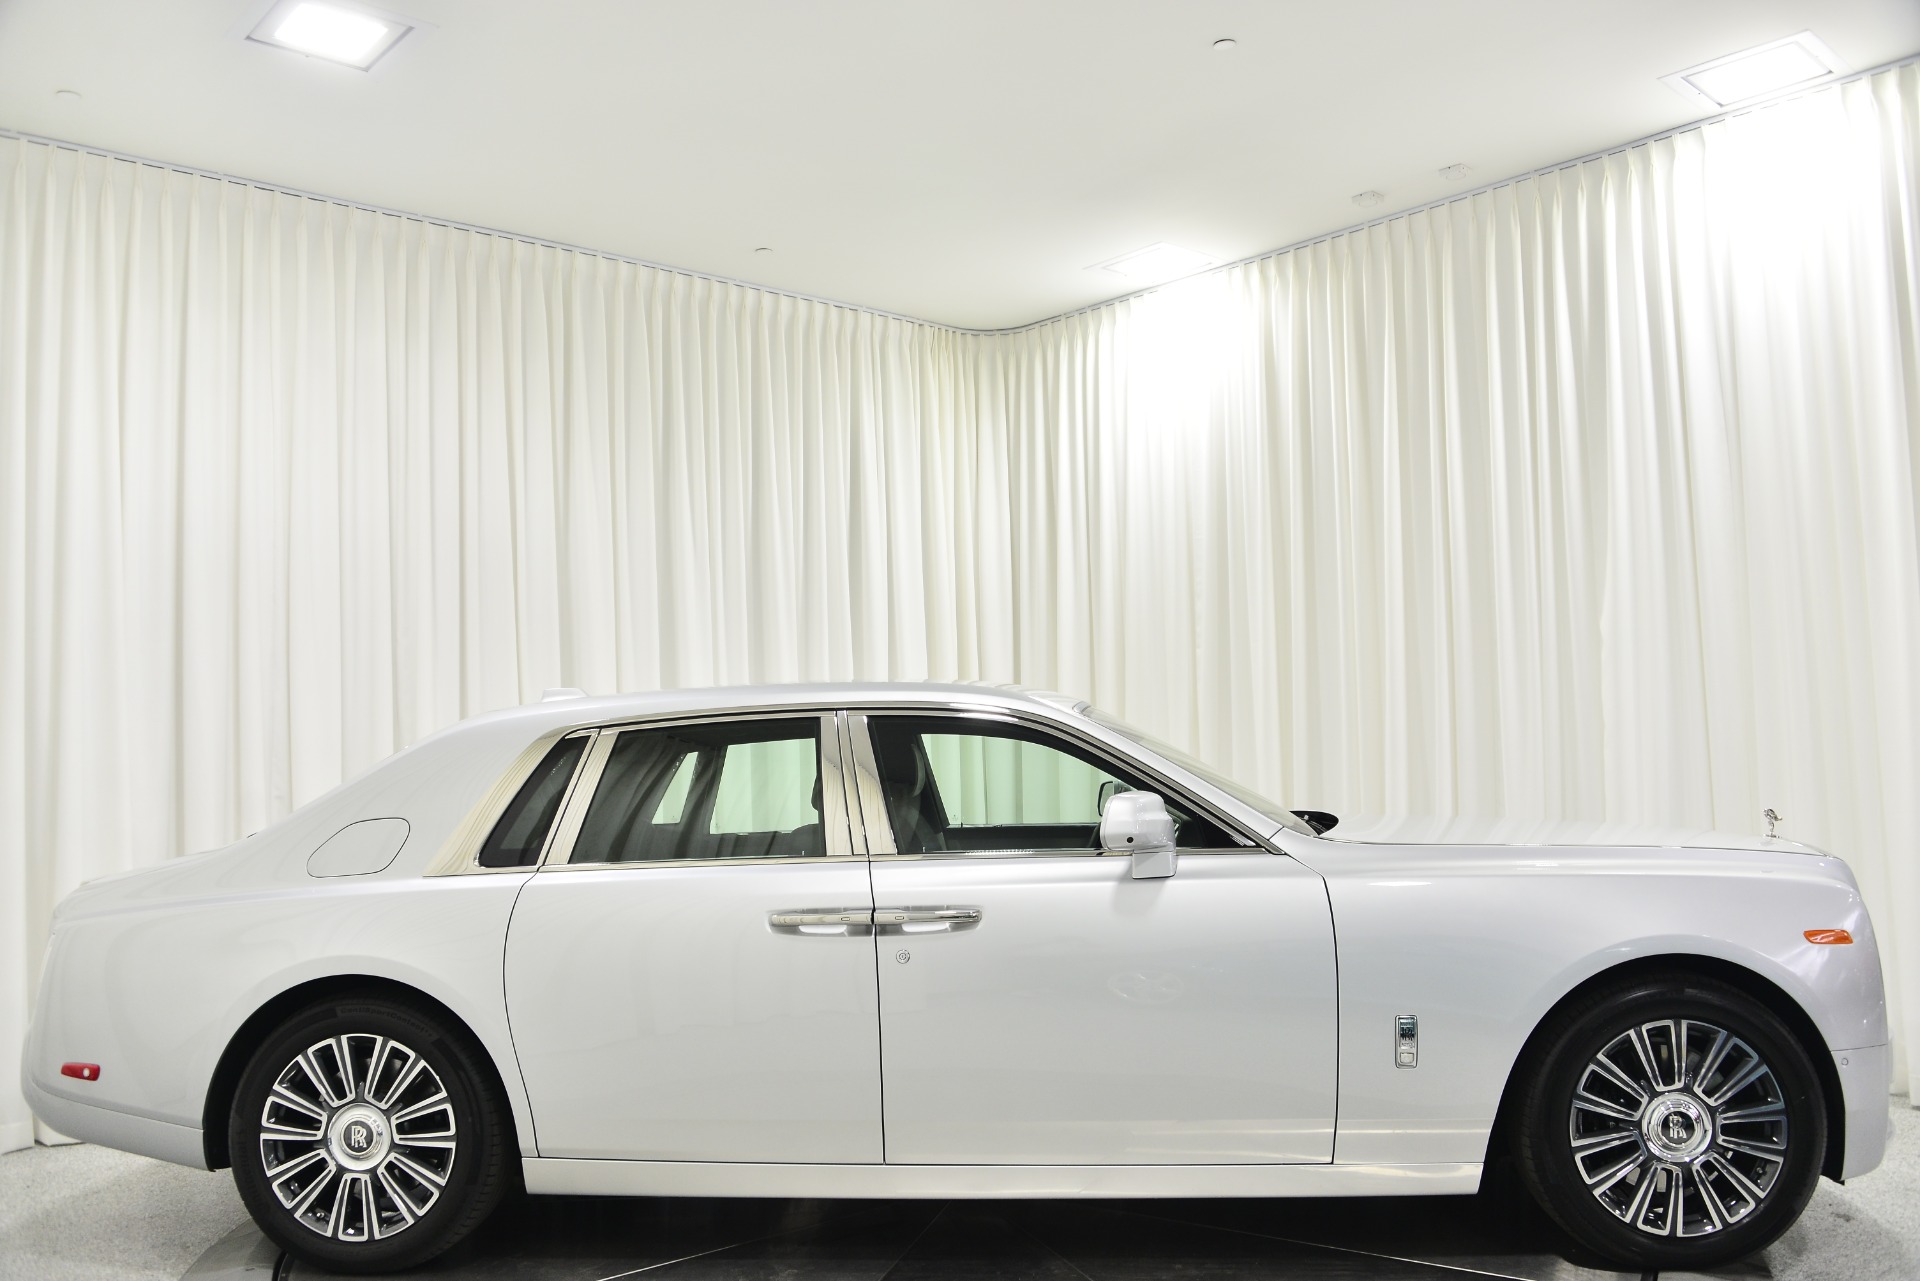 White RollsRoyce Phantom Series II available for Weddings in London